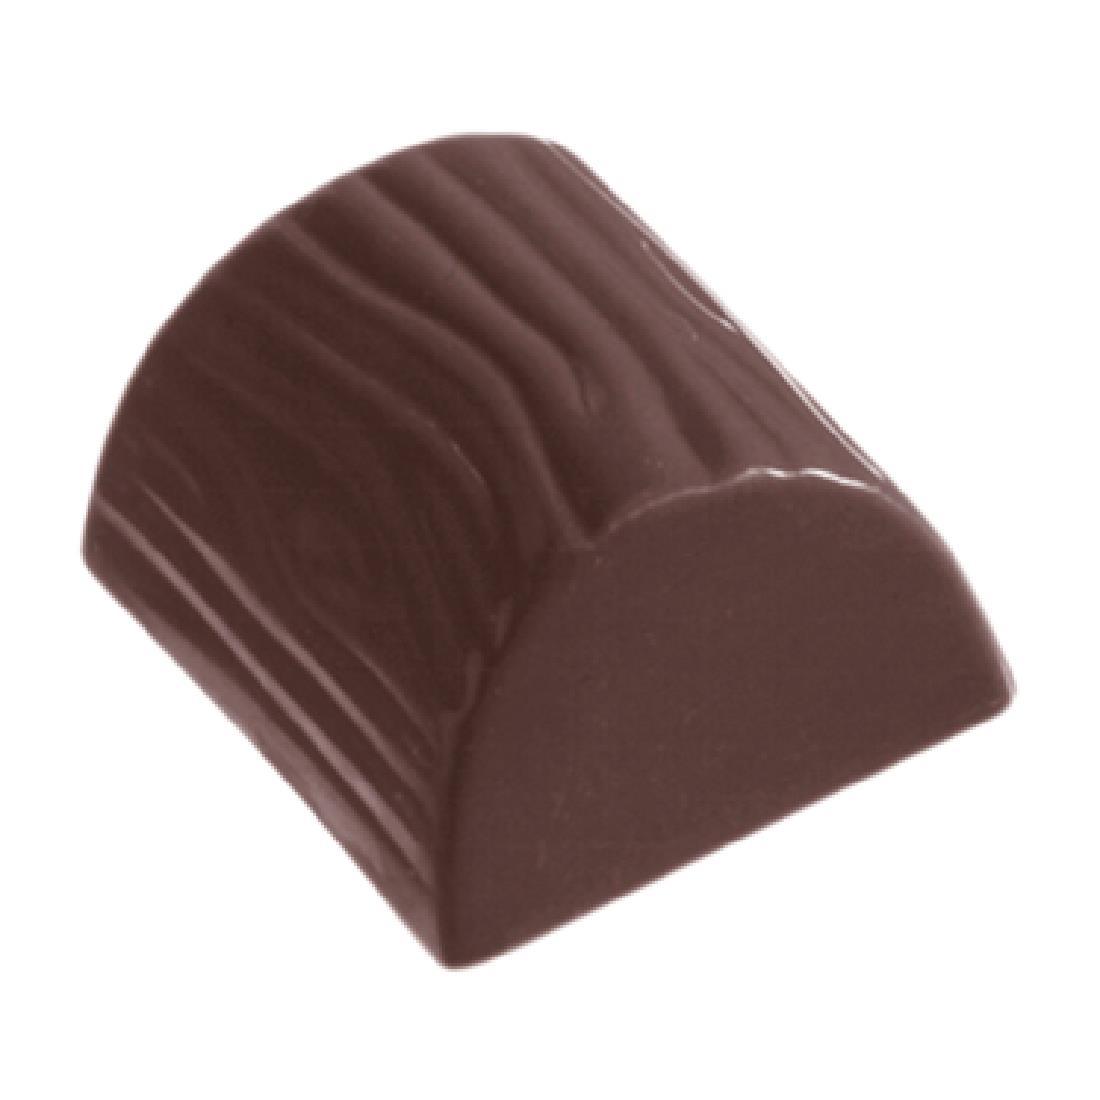 Schneider Chocolate Mould Square - DW292  - 7